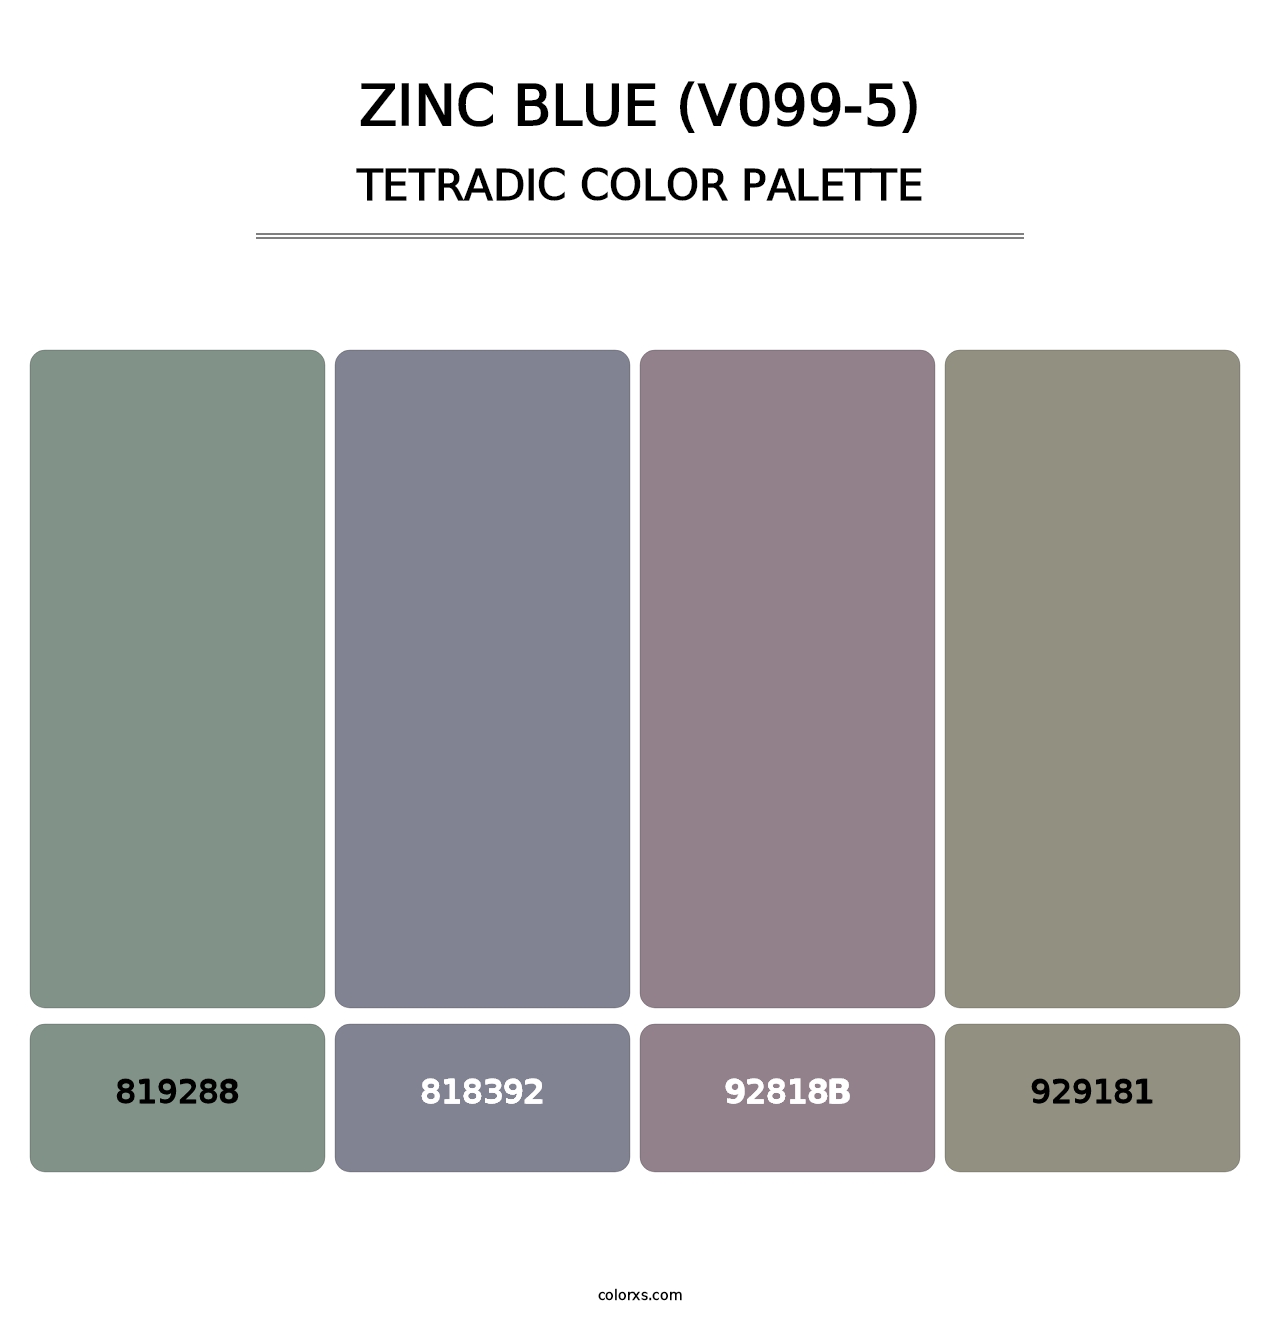 Zinc Blue (V099-5) - Tetradic Color Palette